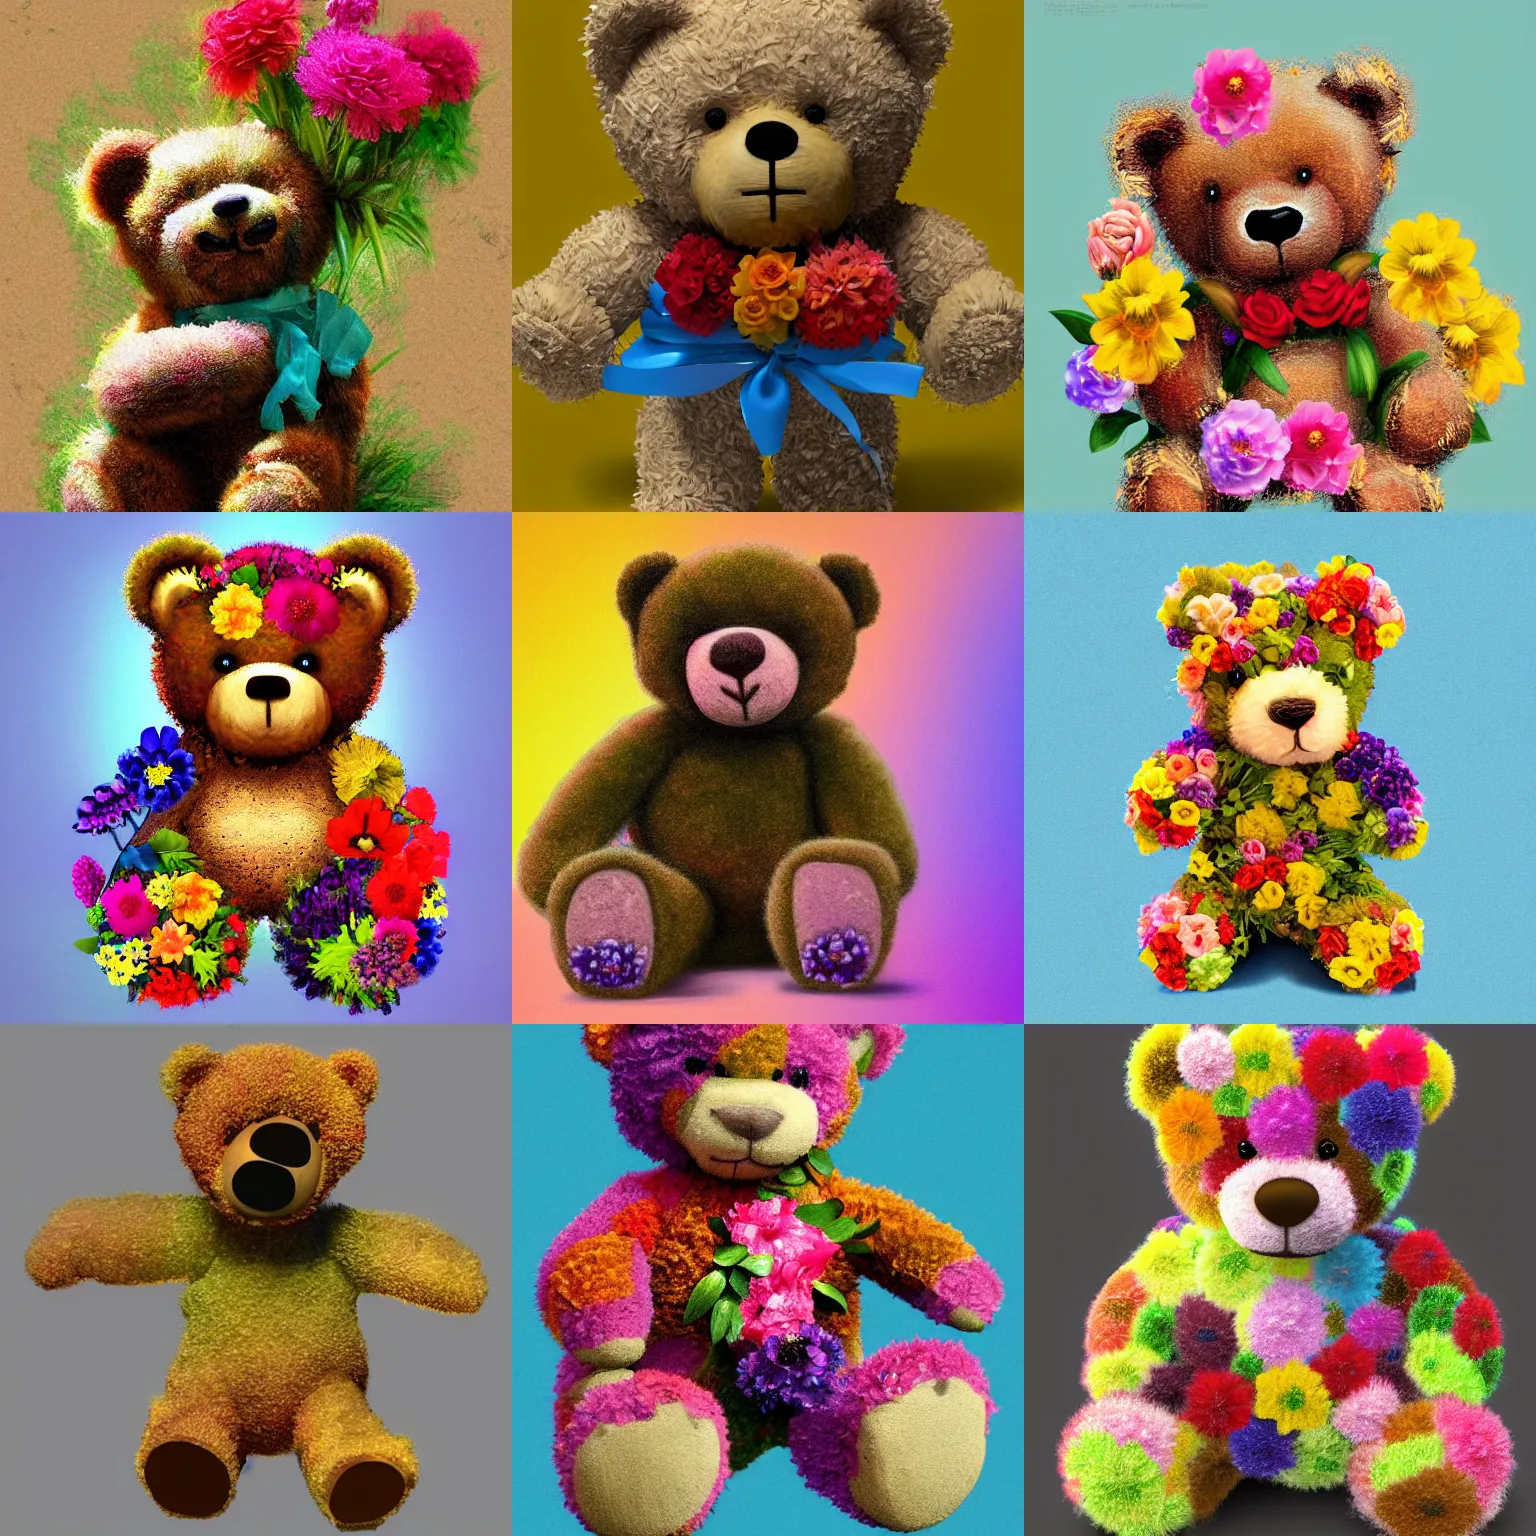 Prompt: a teddy bear made of flowers, digital art, trending on artstation, colorful, vibrant